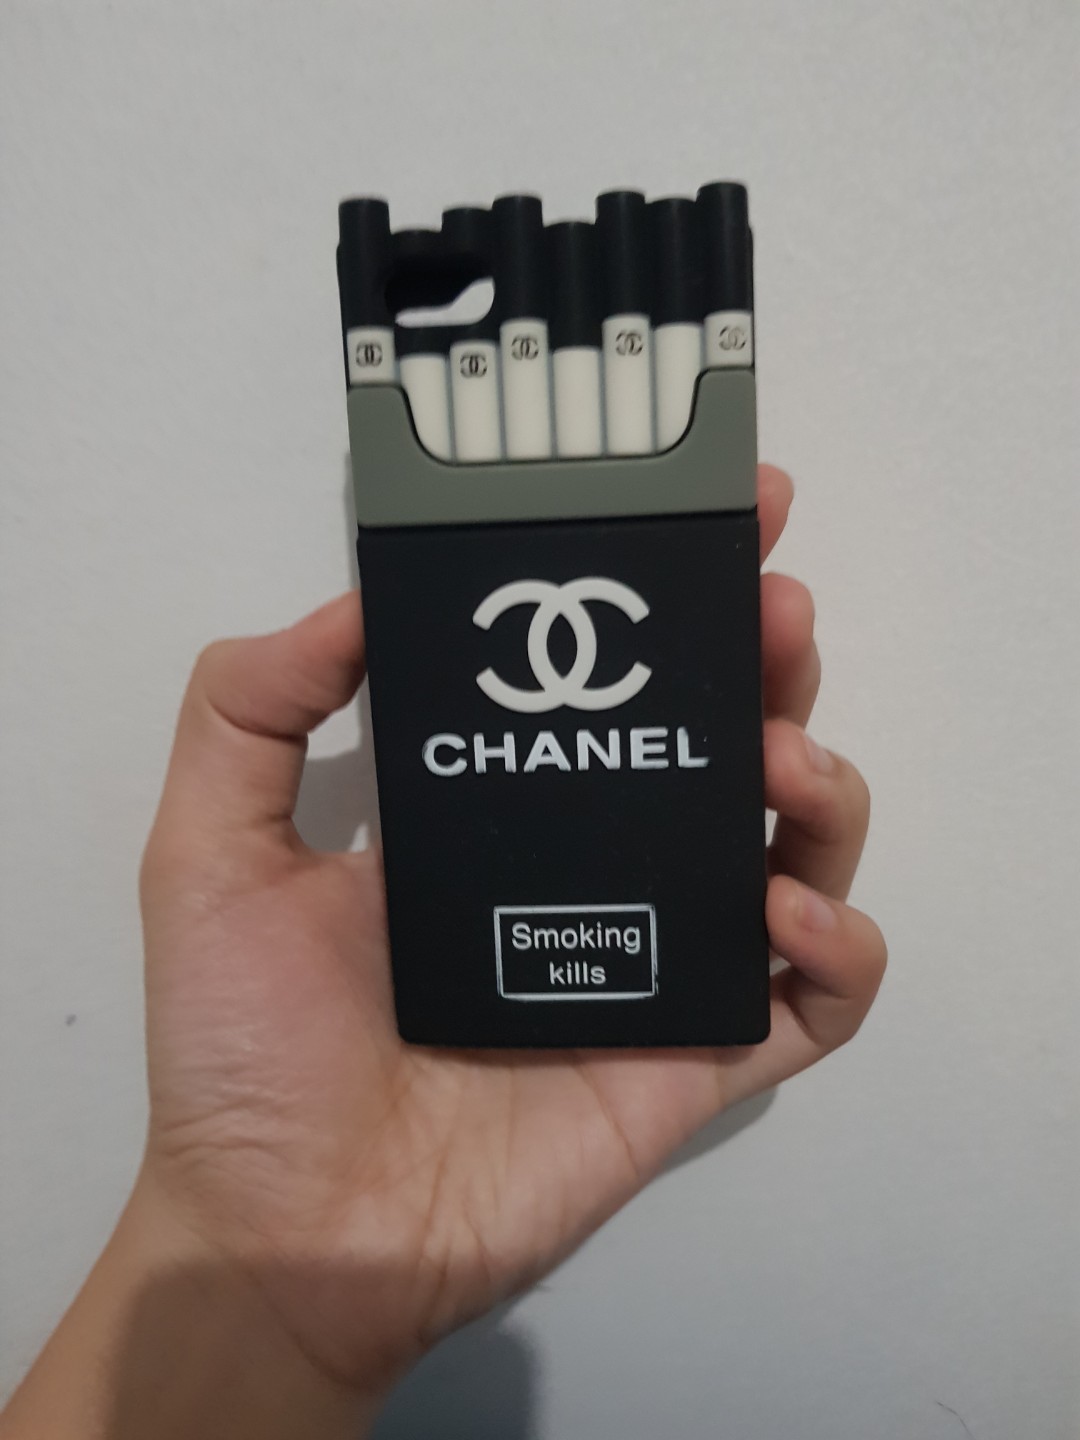 Chanel Cigarette Case Iphone 5/5s, Mobile Phones & Gadgets, Mobile